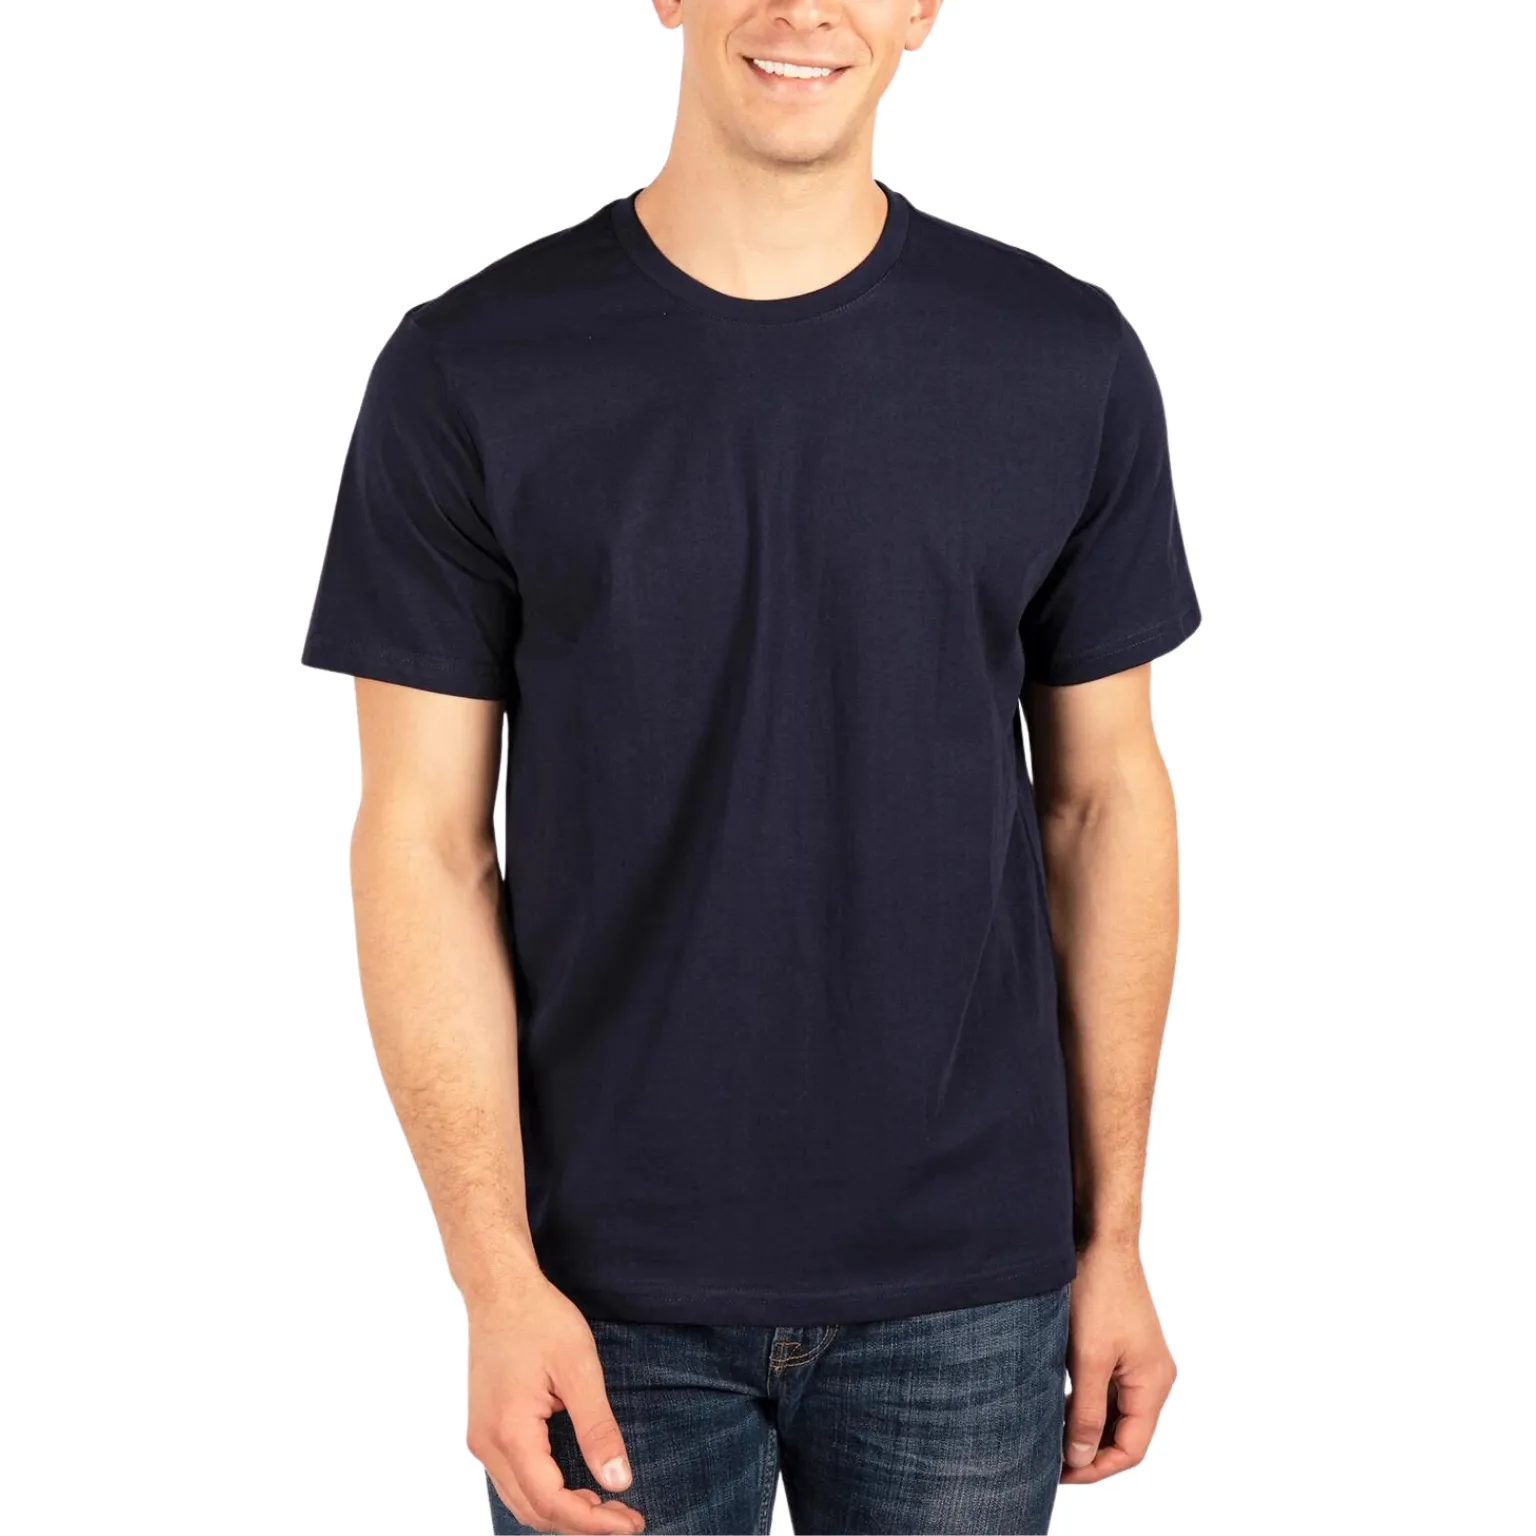 Uniform T-shirt Manufacturing